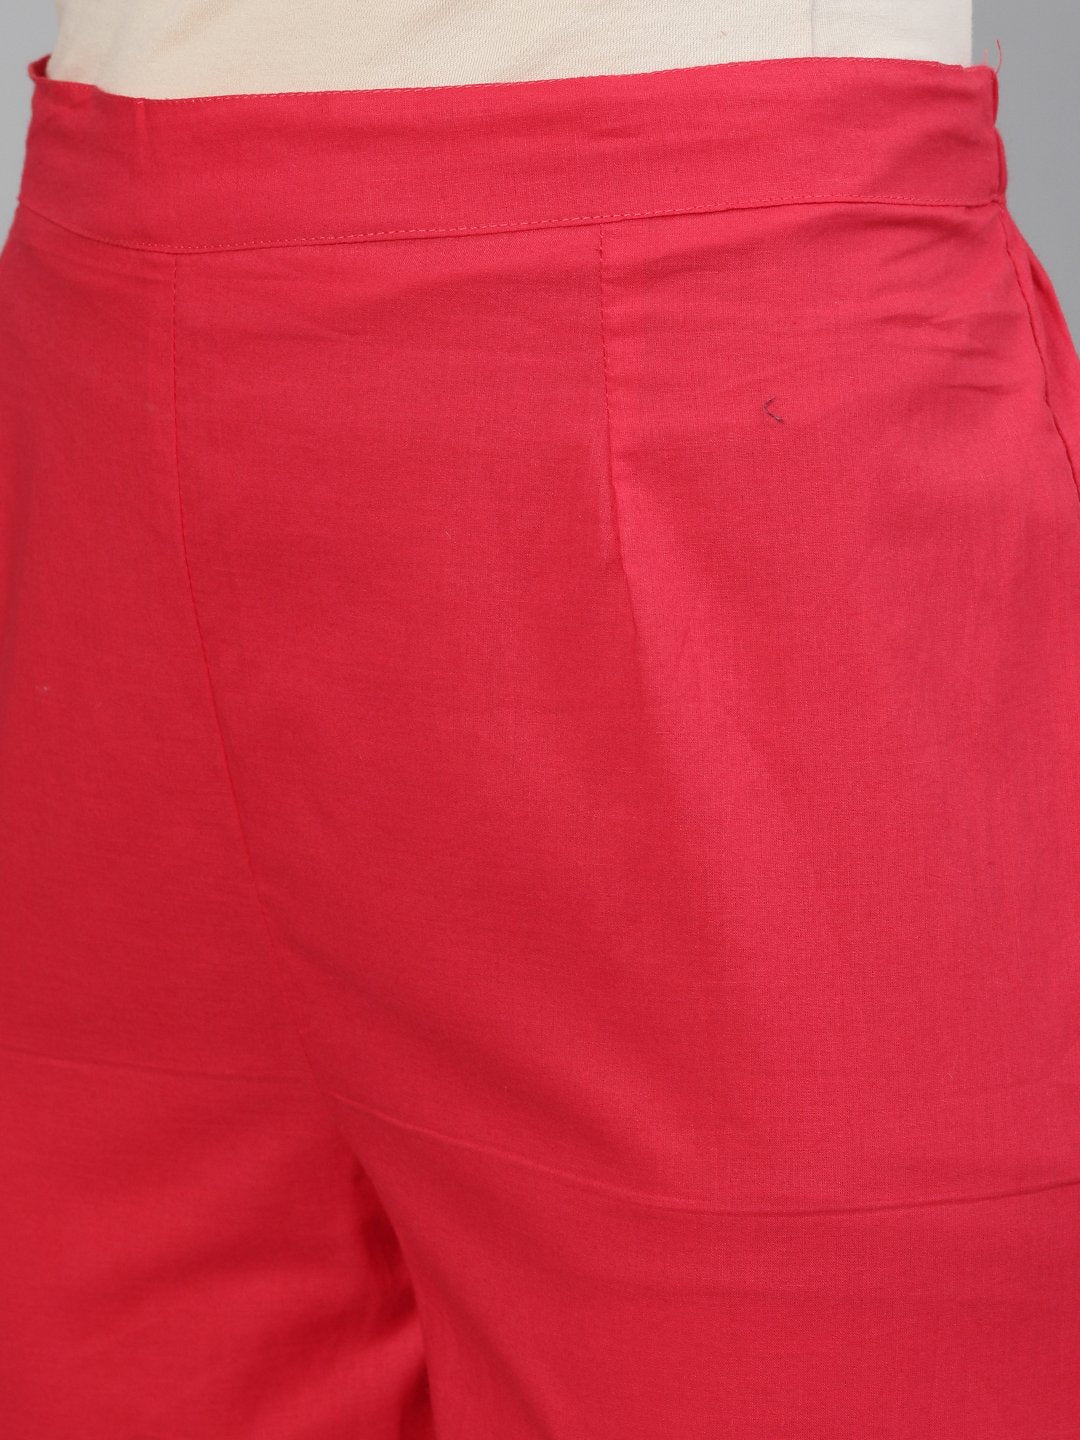 Ishin Women's Cotton Sea Green & Pink Printed A-Line Kurta Trouser Set